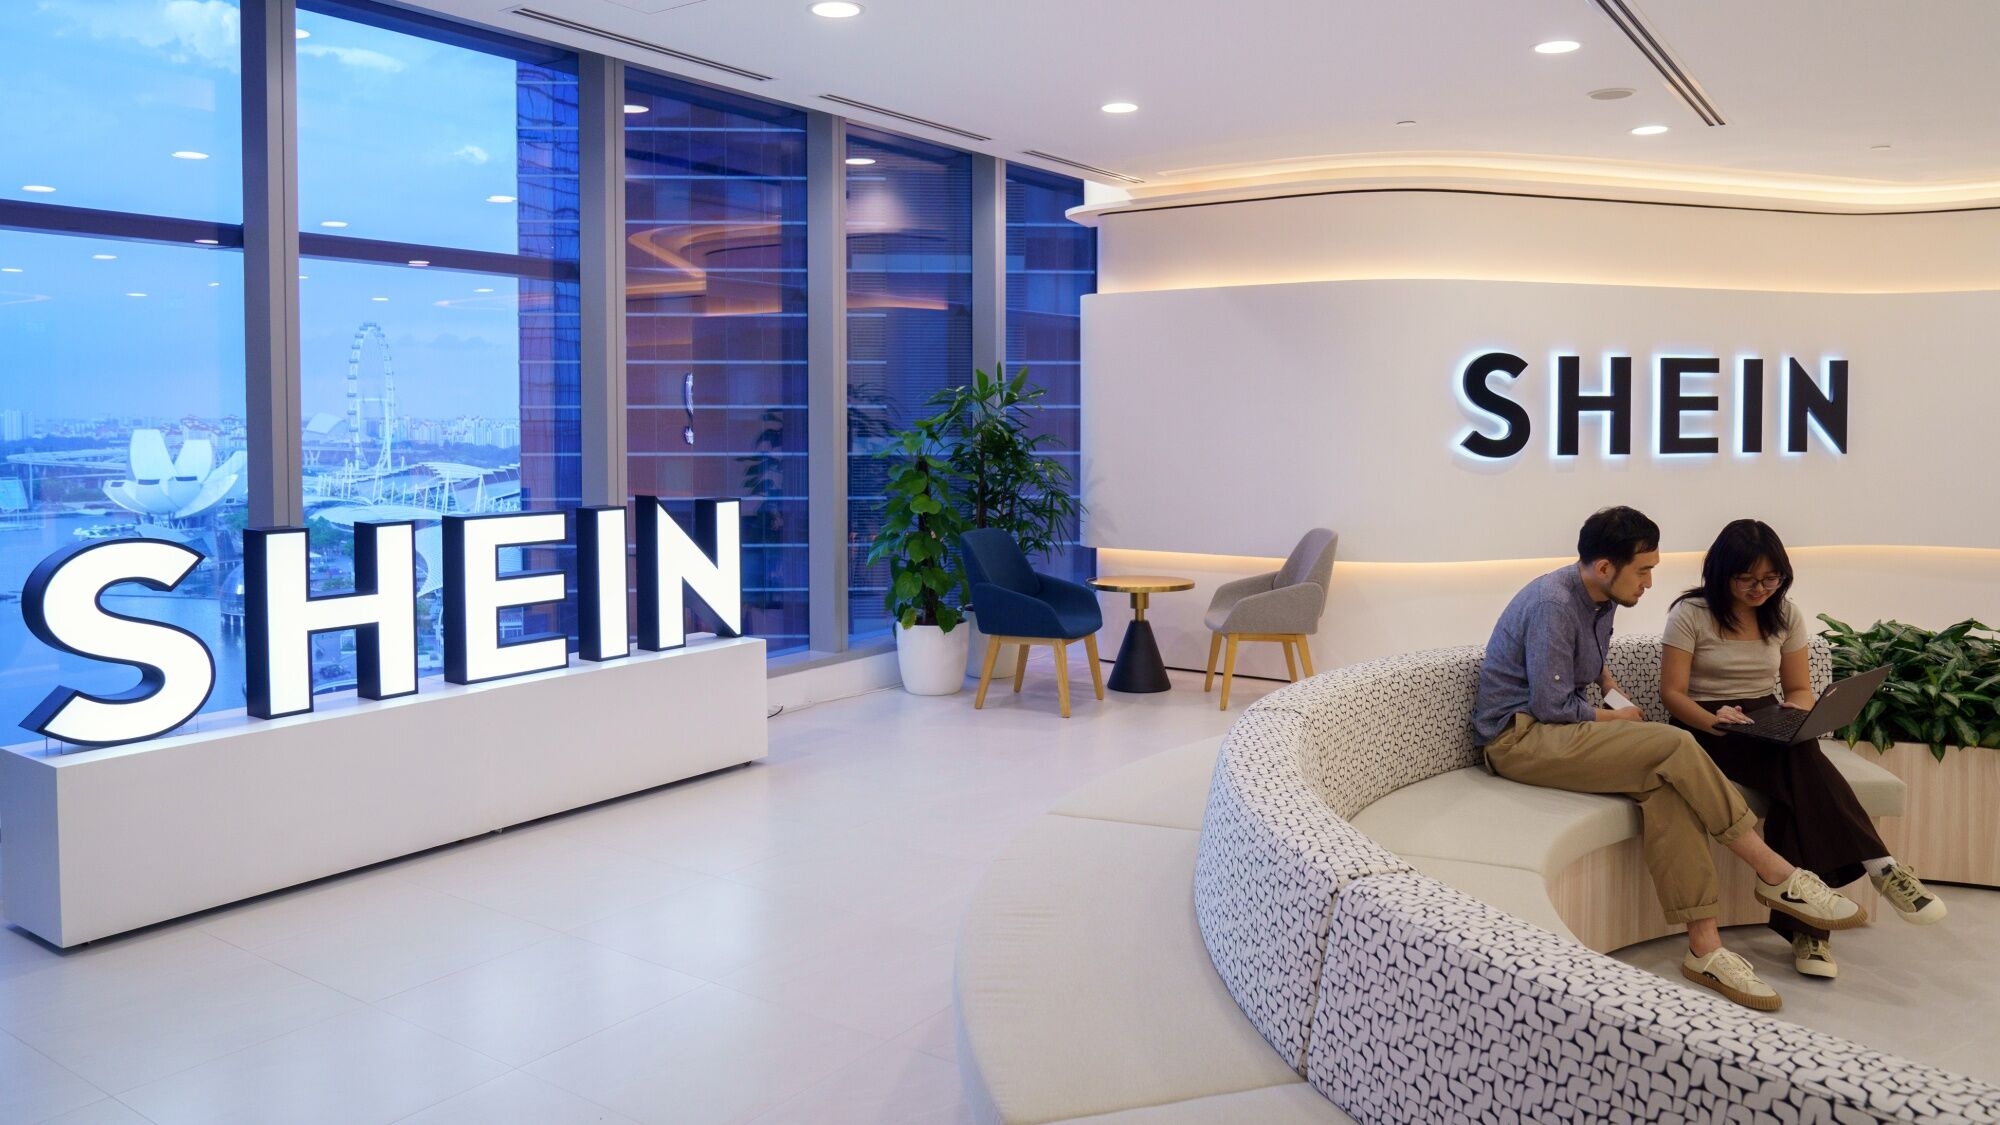 SHEIN Supplier Factory Wage Investigation Report - SHEIN Group